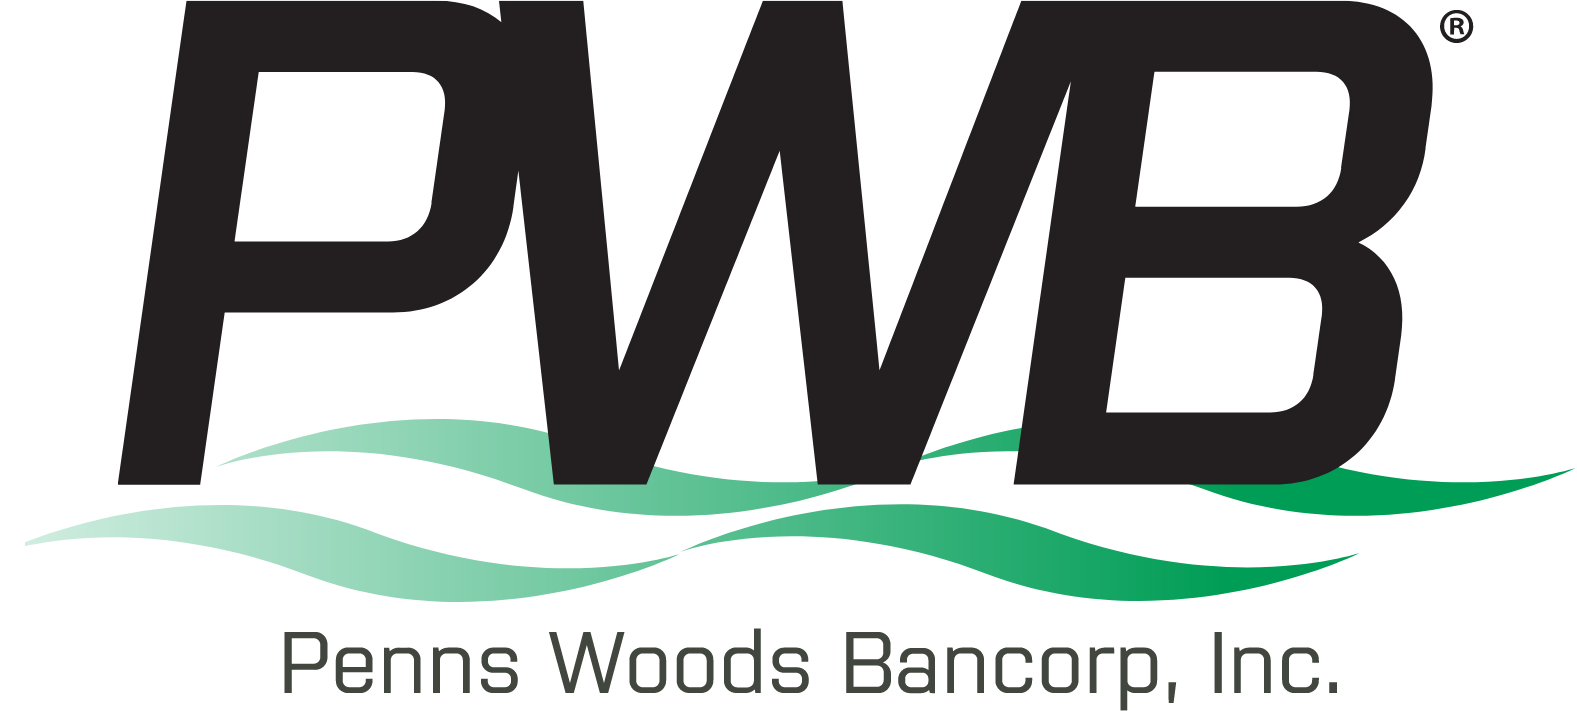 Penns Woods Bancorp, Inc. Logo